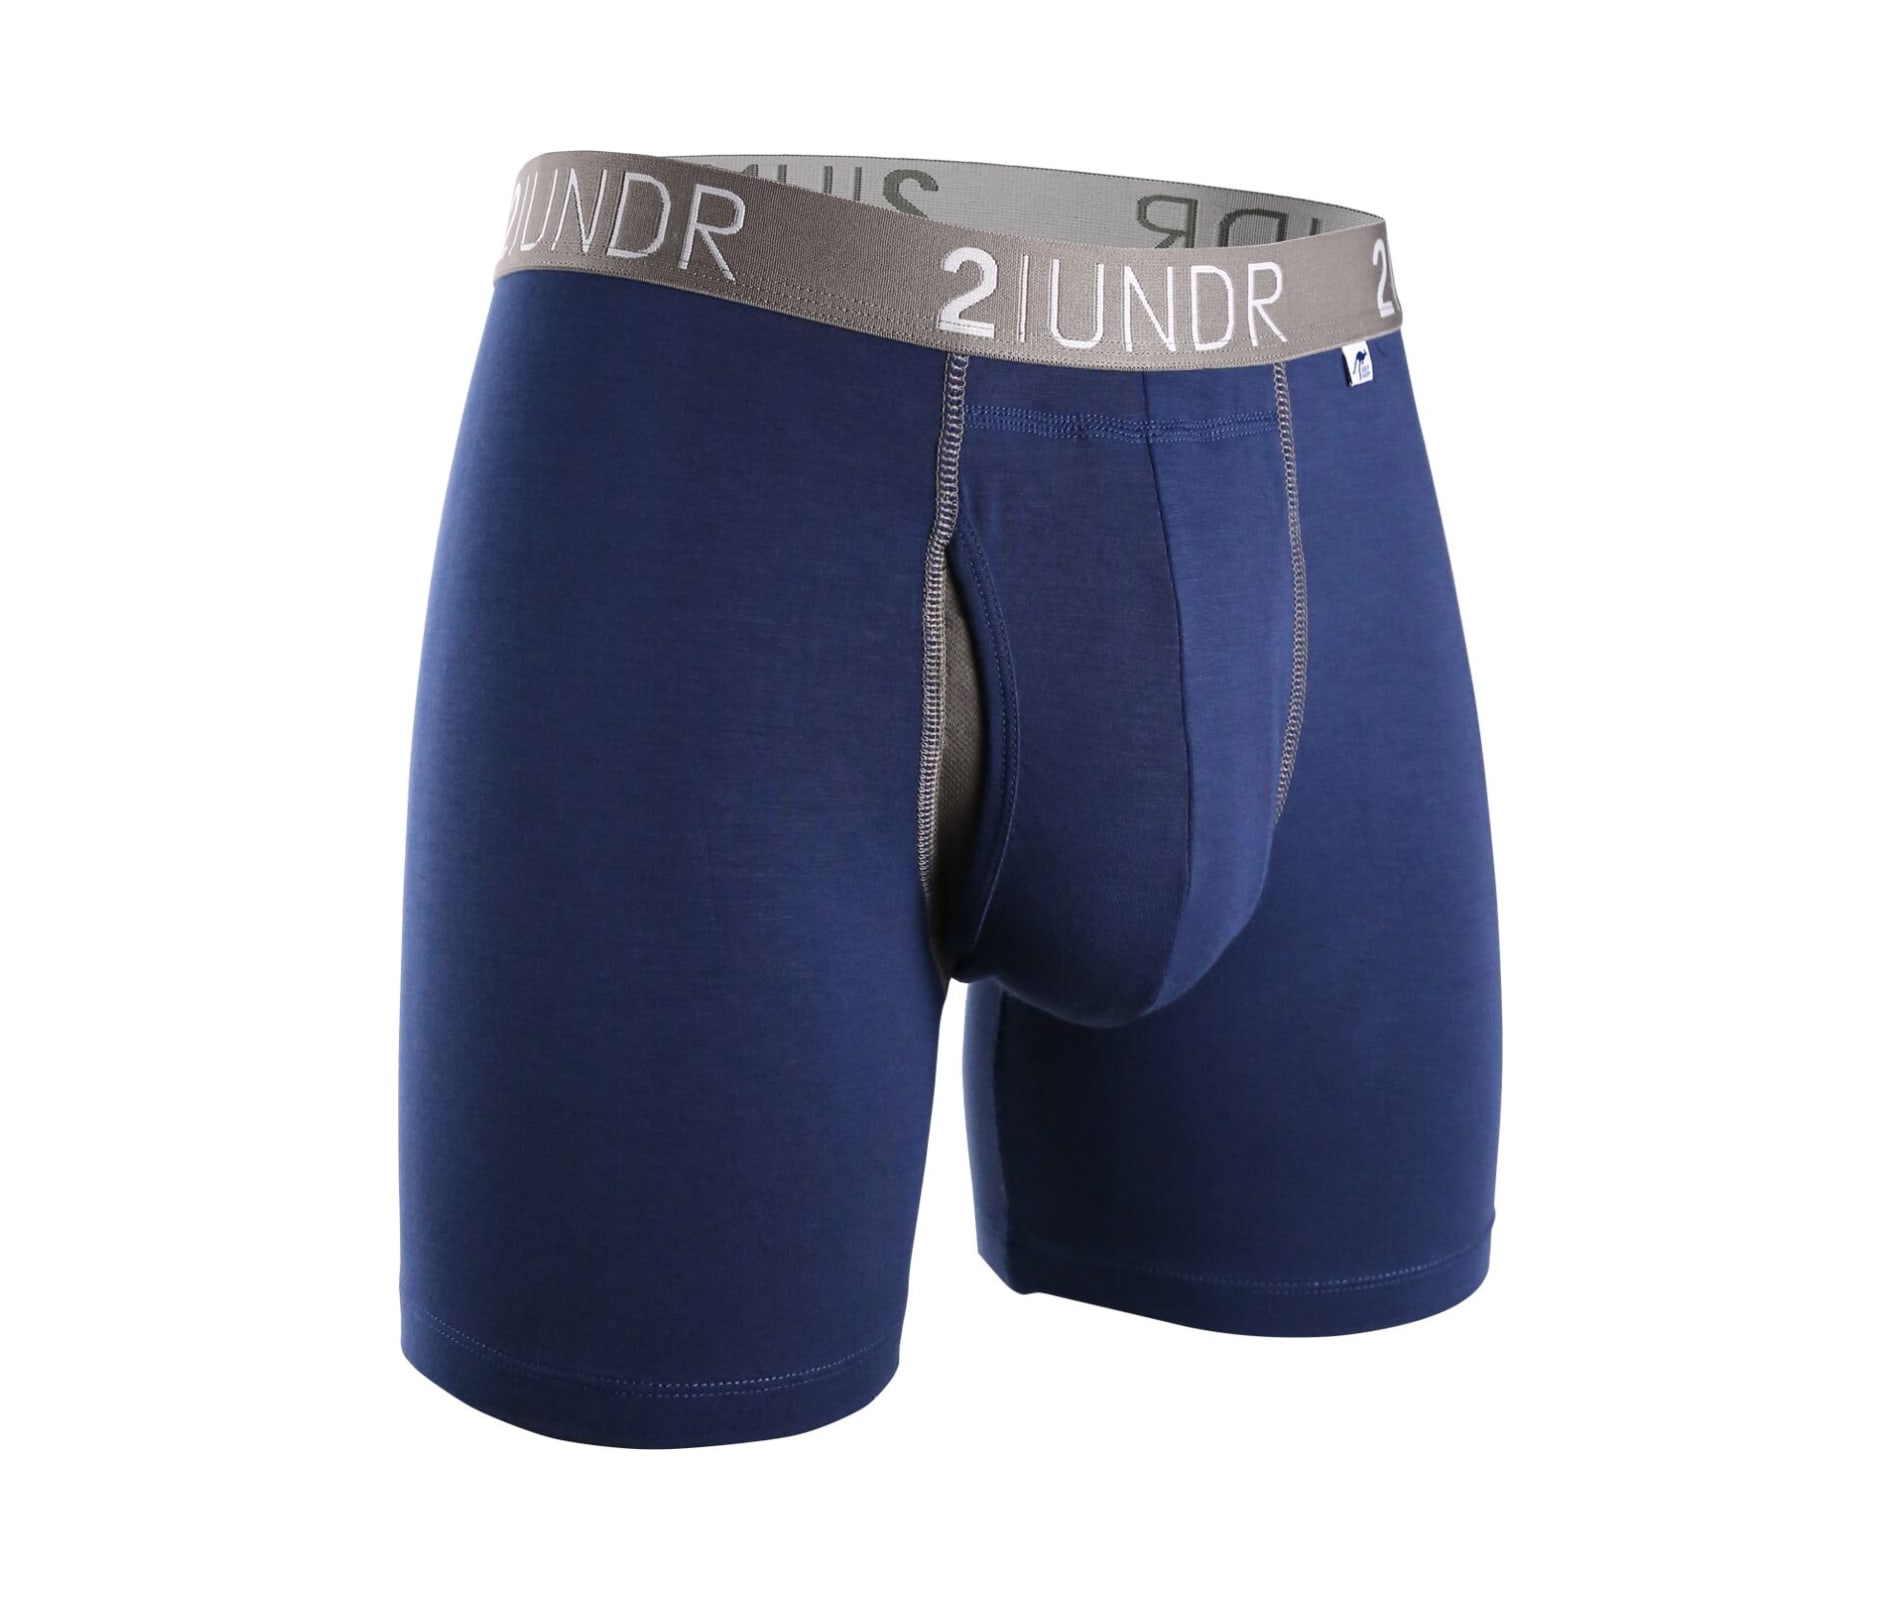 2UNDR Men's Swing Shift Boxer Brief - Grey/blue - 2XL